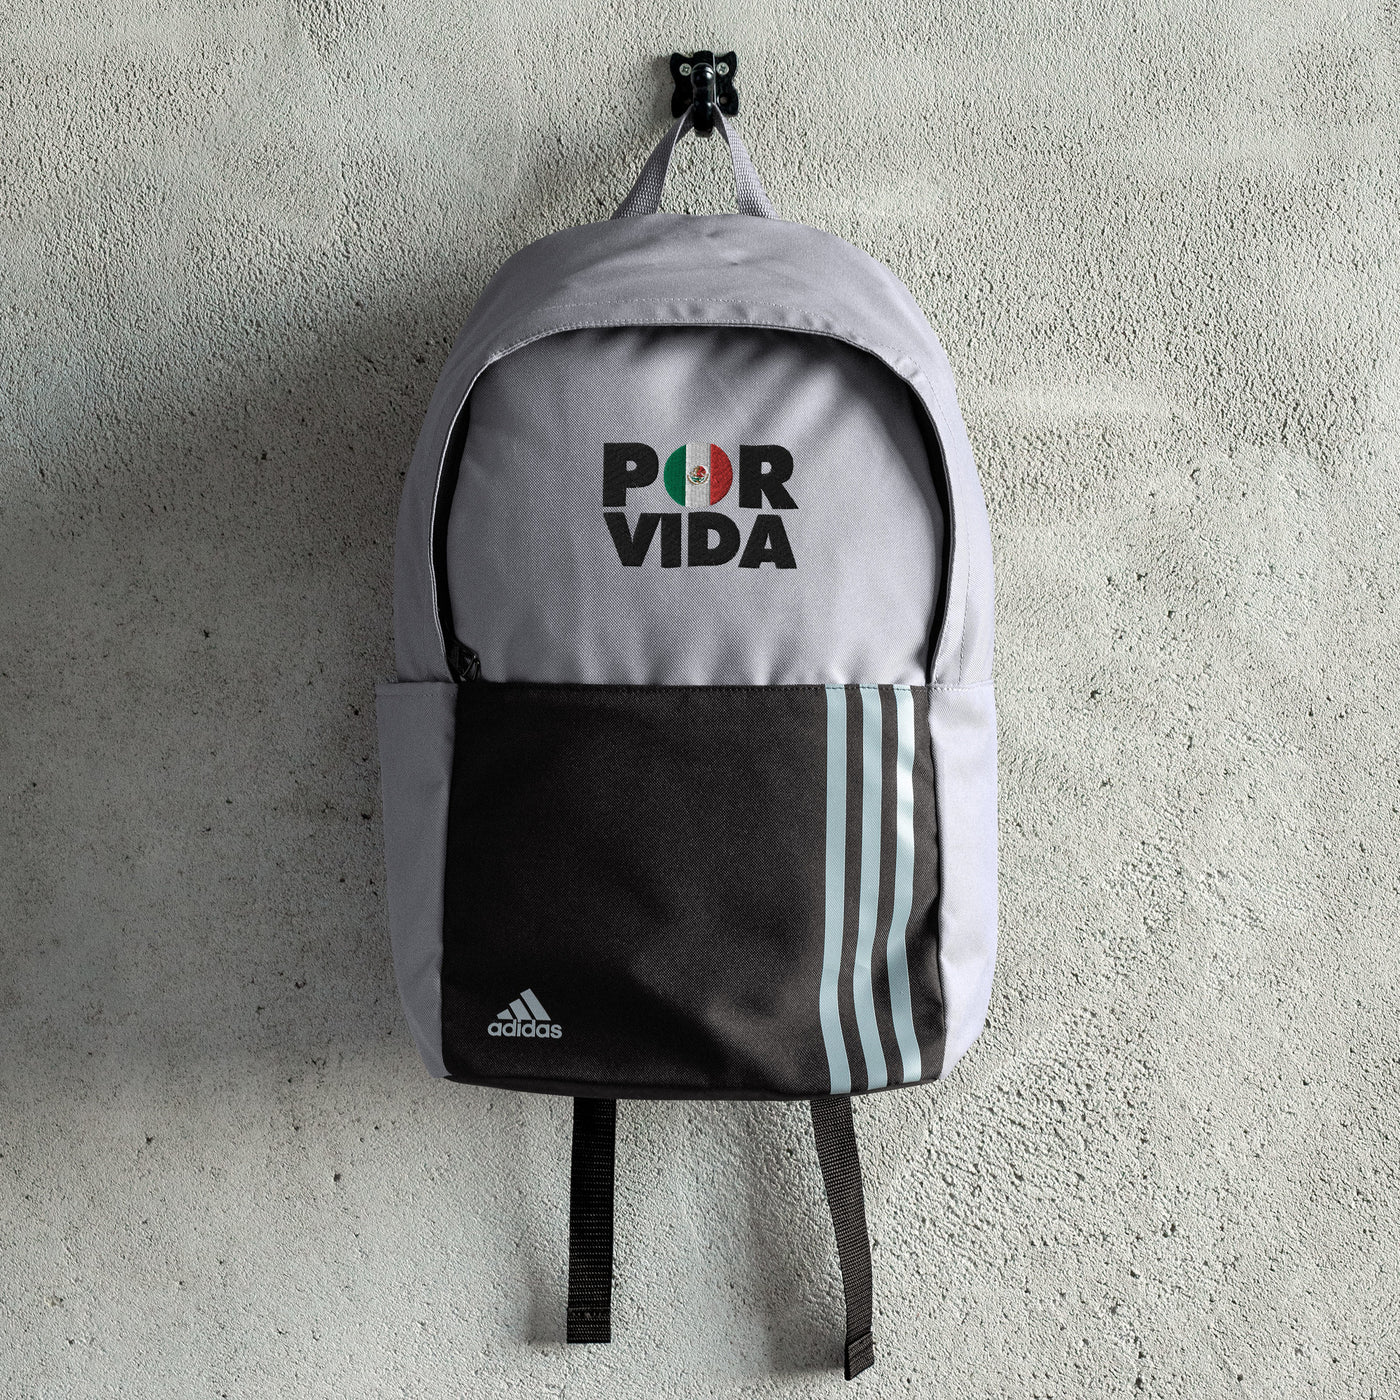 POR VIDA adidas backpack (Mexico)